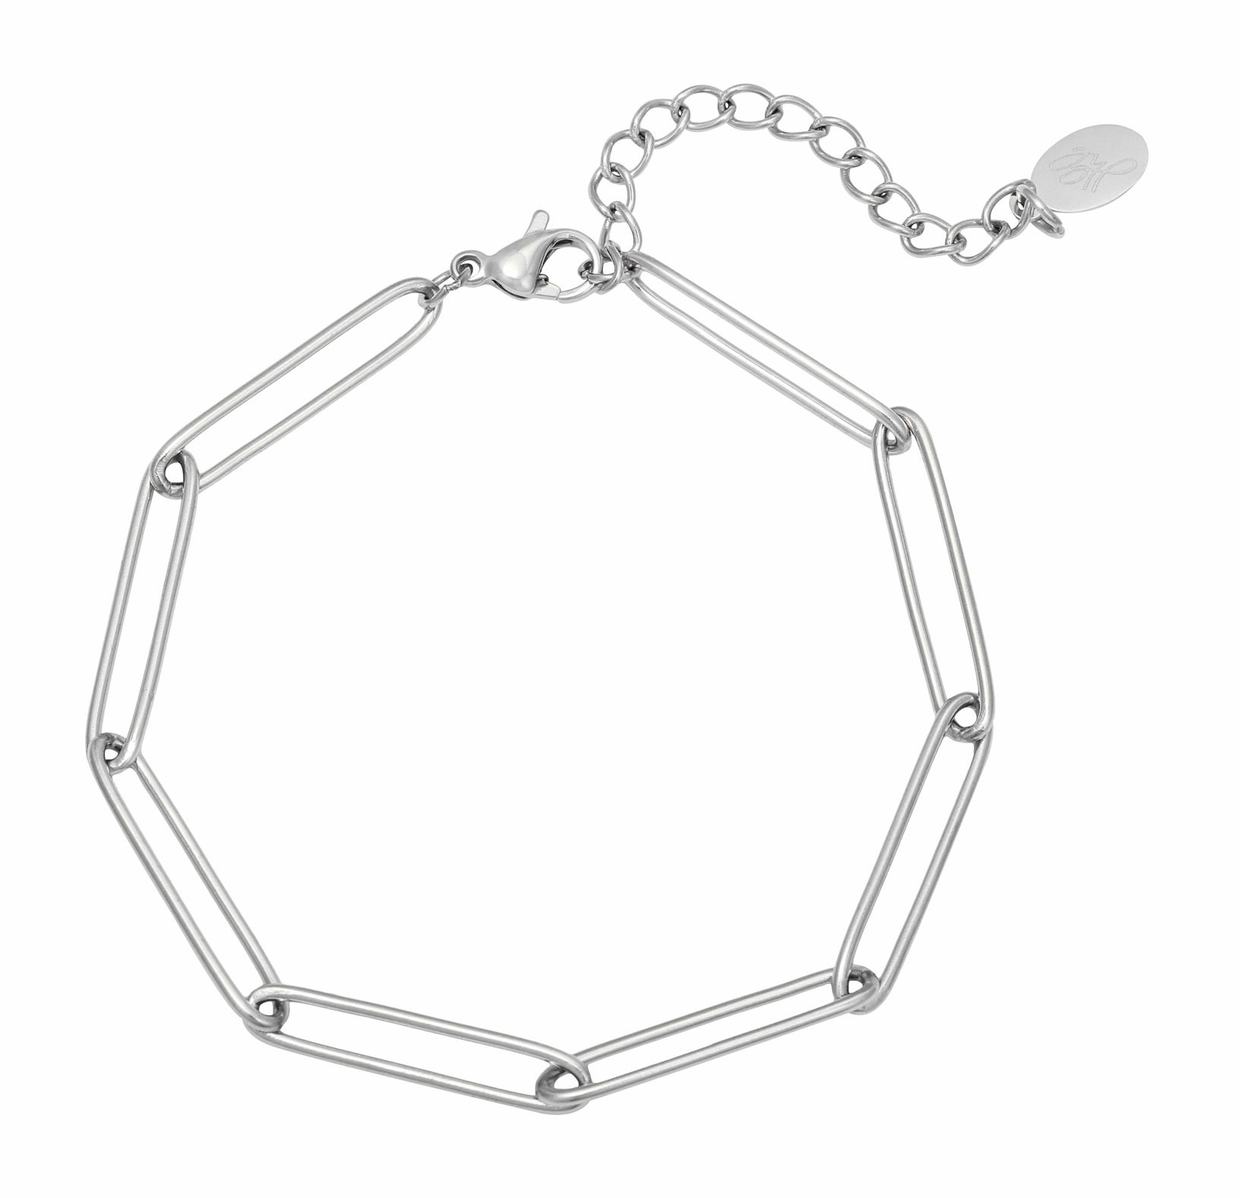 Bracelet plain chain silver